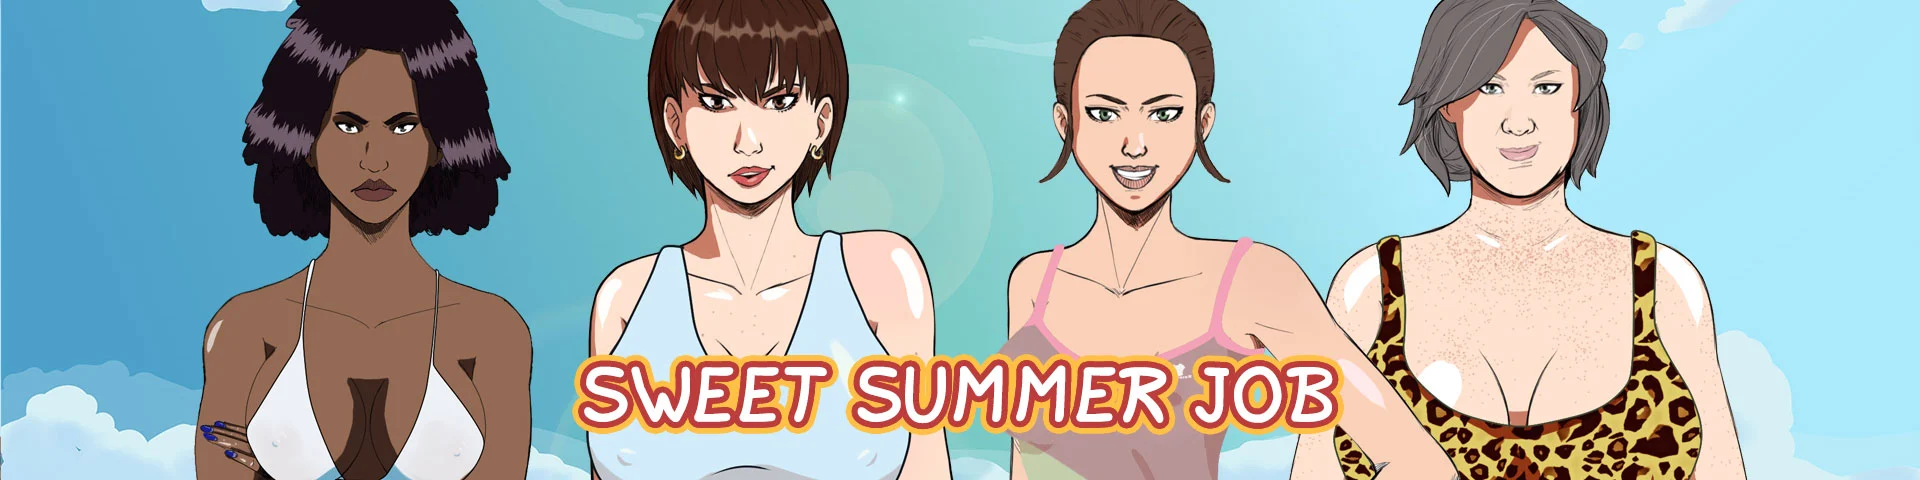 Sweet Summer Job [v0.20] main image